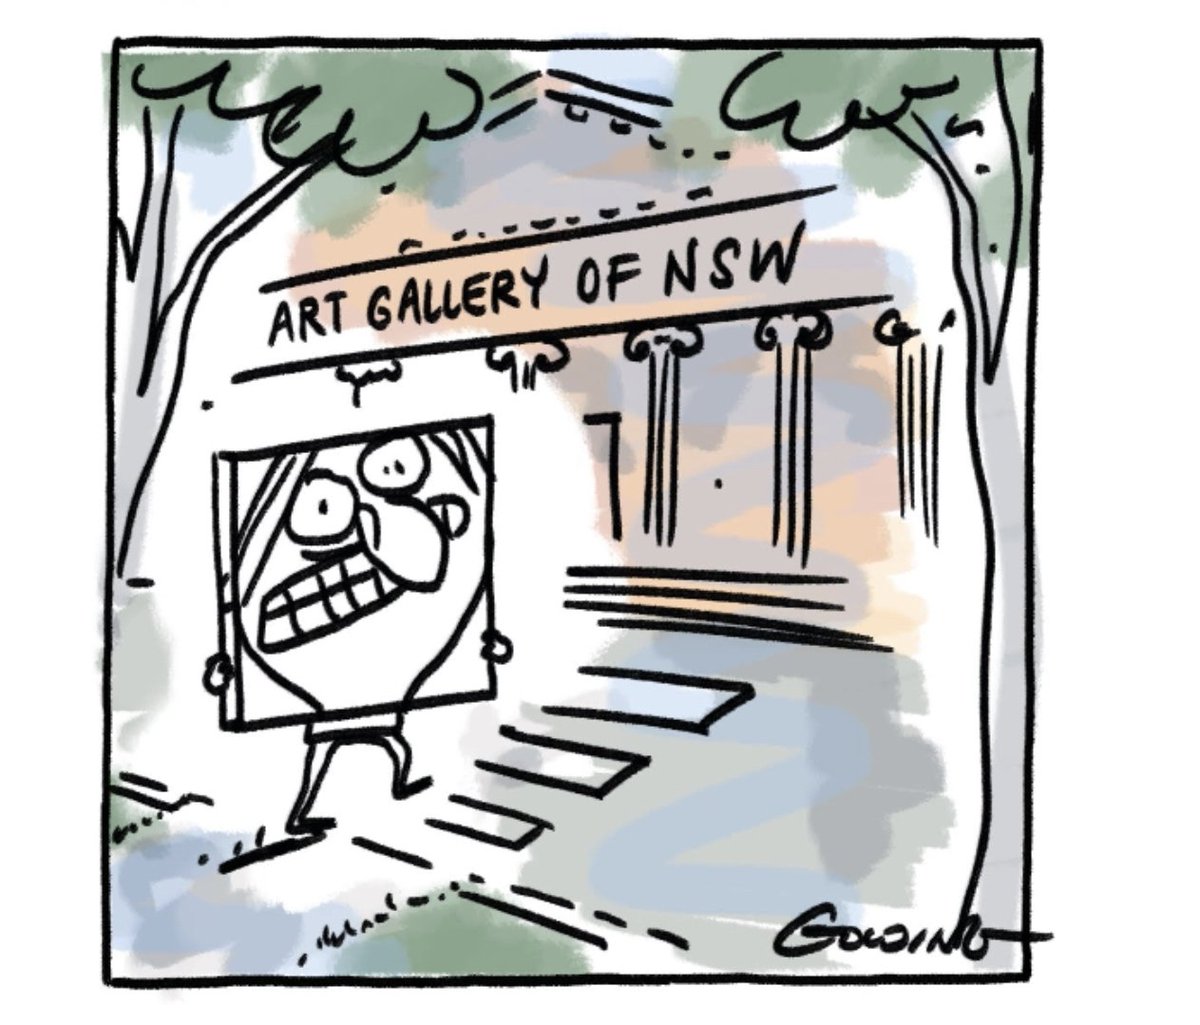 Protest, pain and family the themes as Archibald Prize entries arrive smh.com.au/culture/art-an…